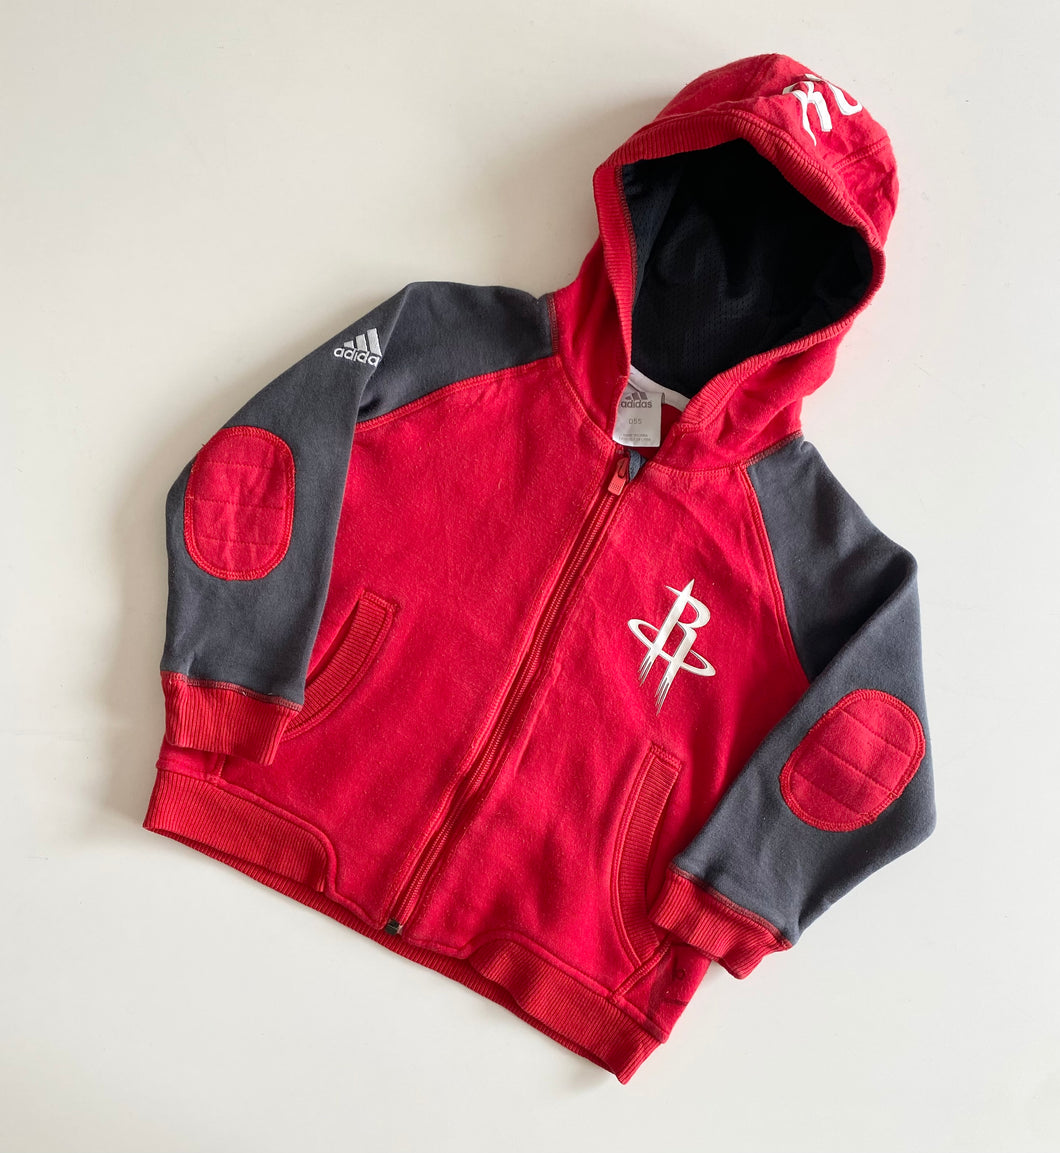 Adidas NBA Houston Rockets hoodie (Age 4)